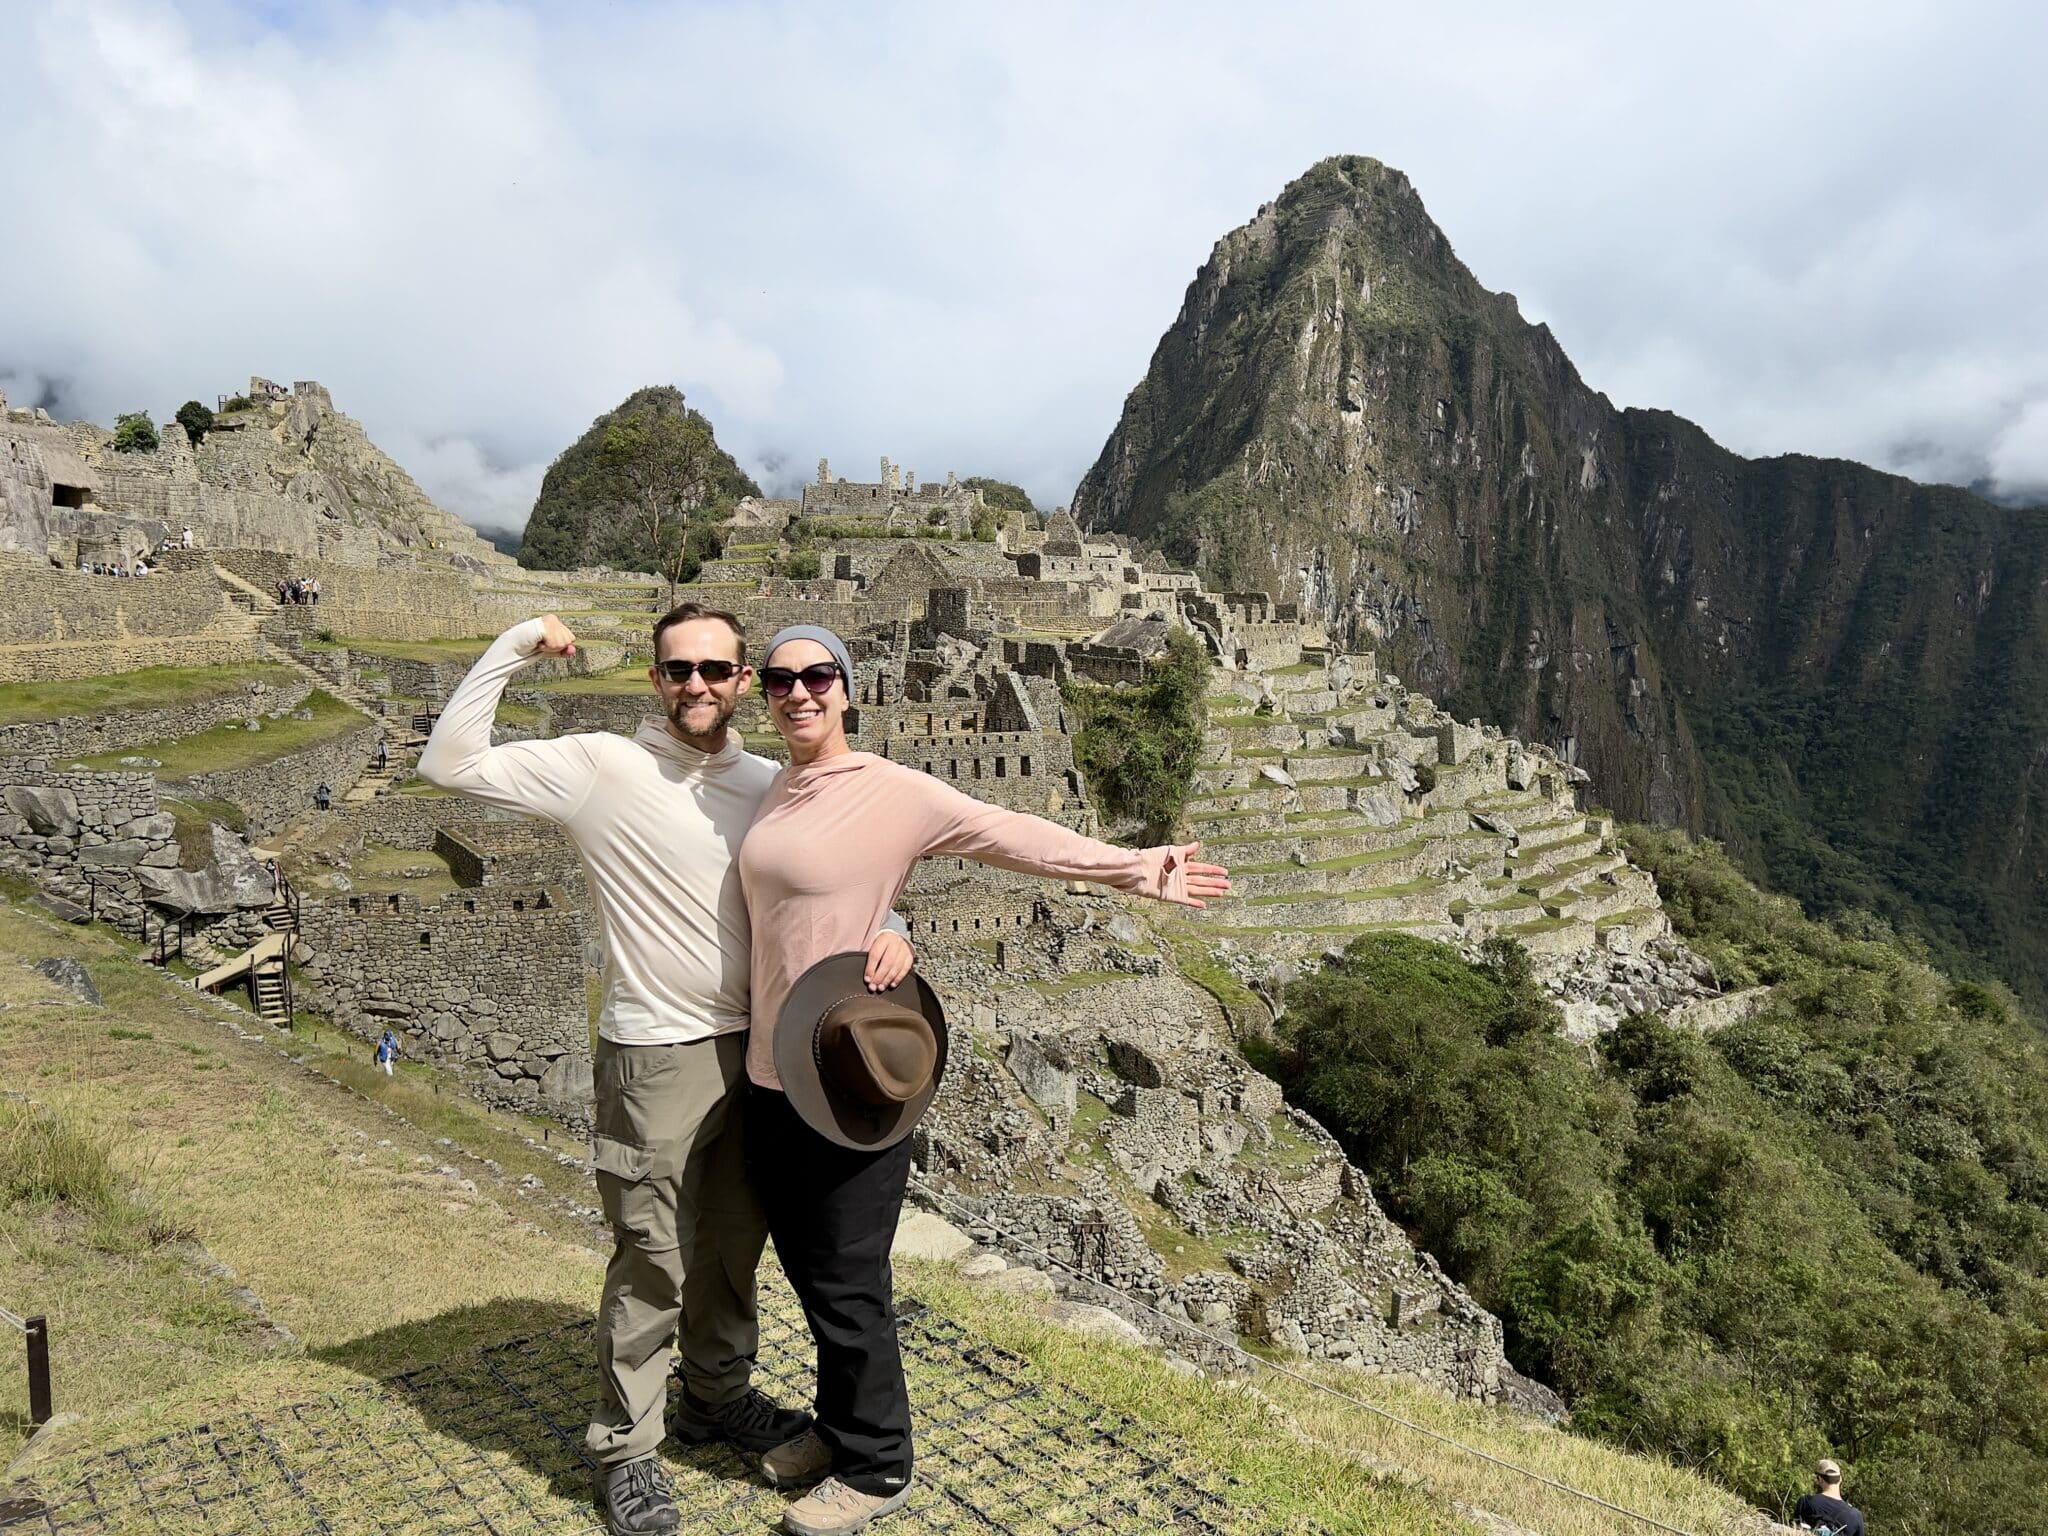 2 hikers posing by Machu Picchu after the Inca Trail trek